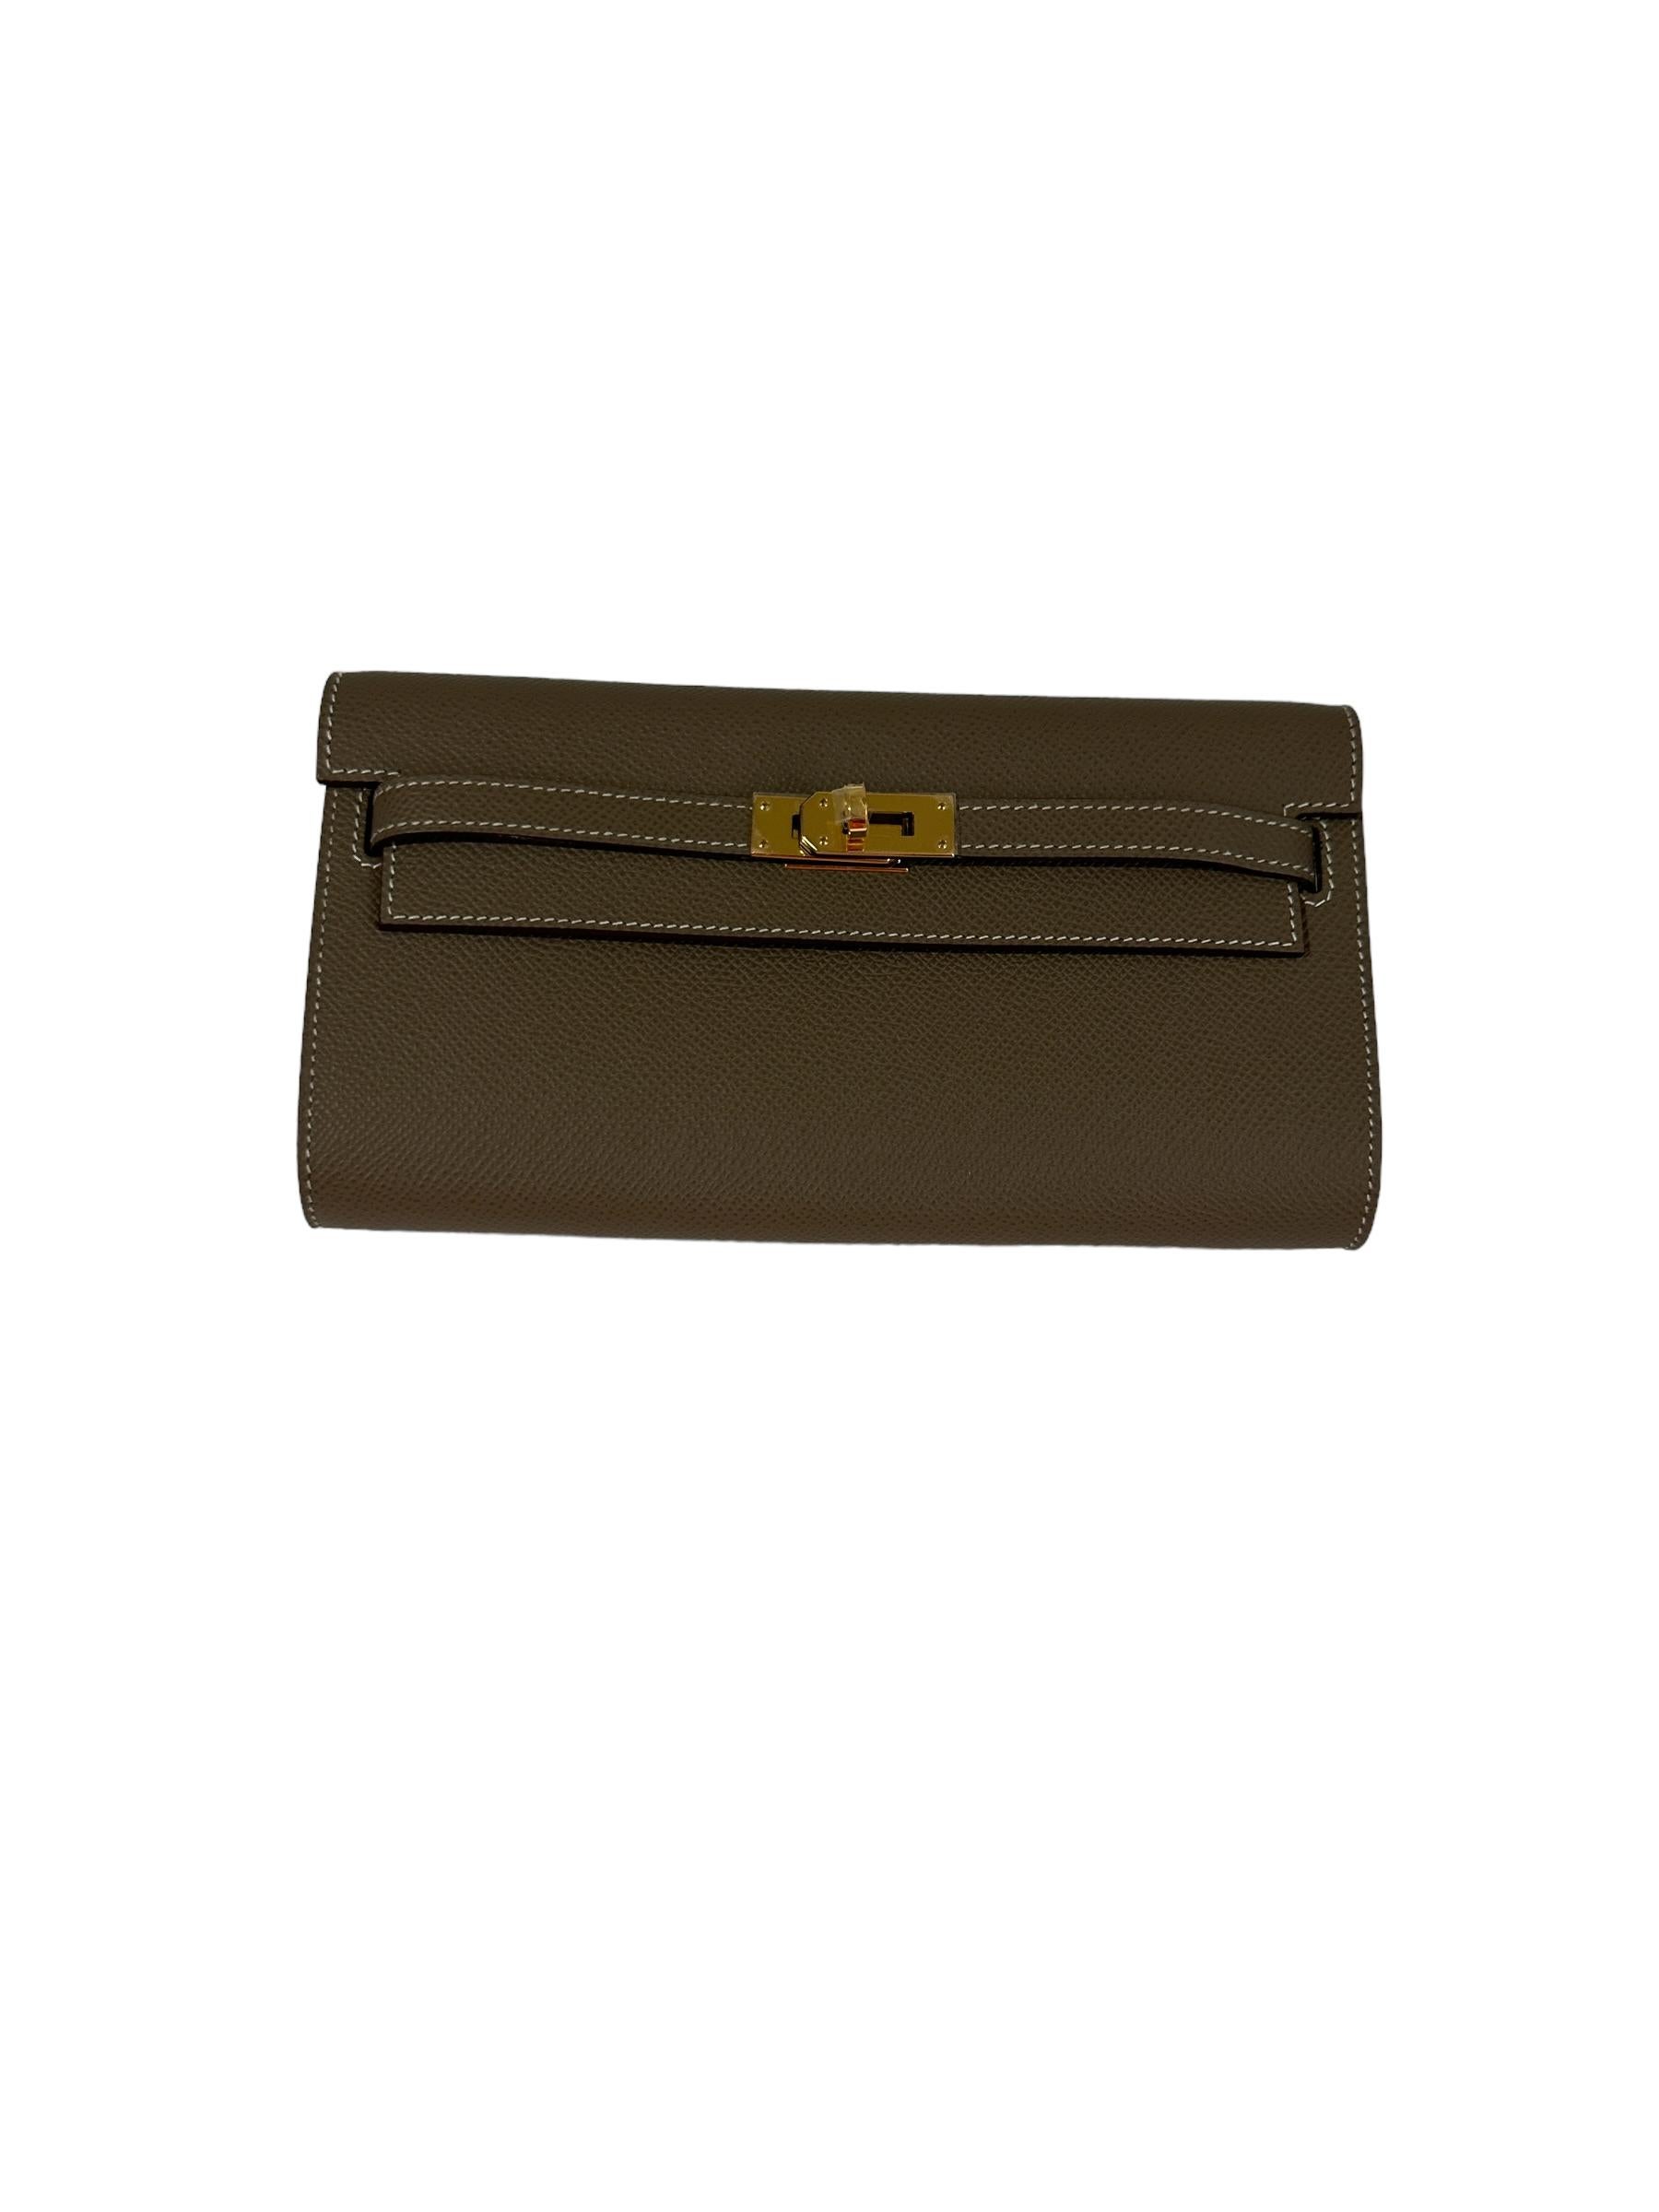 Hermes Etoupe Kelly To Go Bag Wallet Epsom Gold Hardware New Strap 2